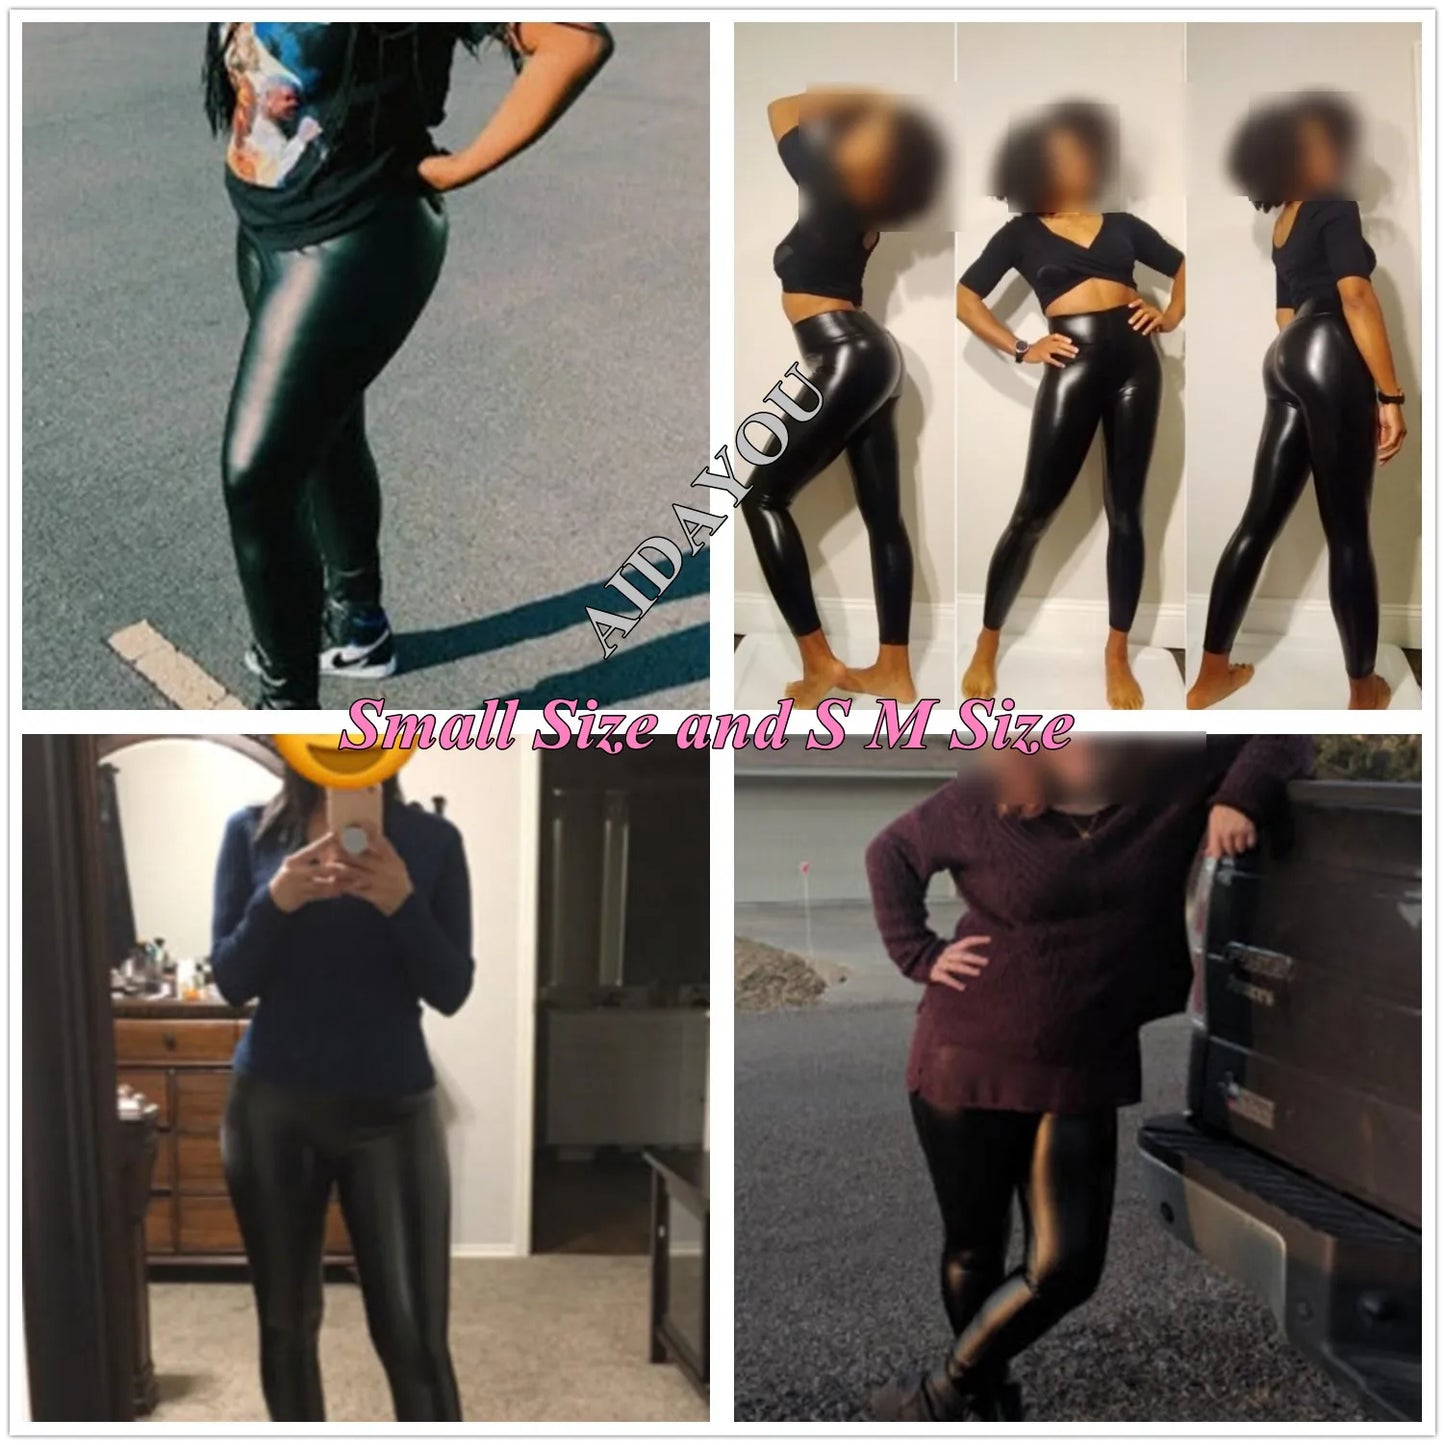 Leggings for Women Big Size 5XL 6XL 7XL Black Spandex Clothing Faux Leather PU Leggings